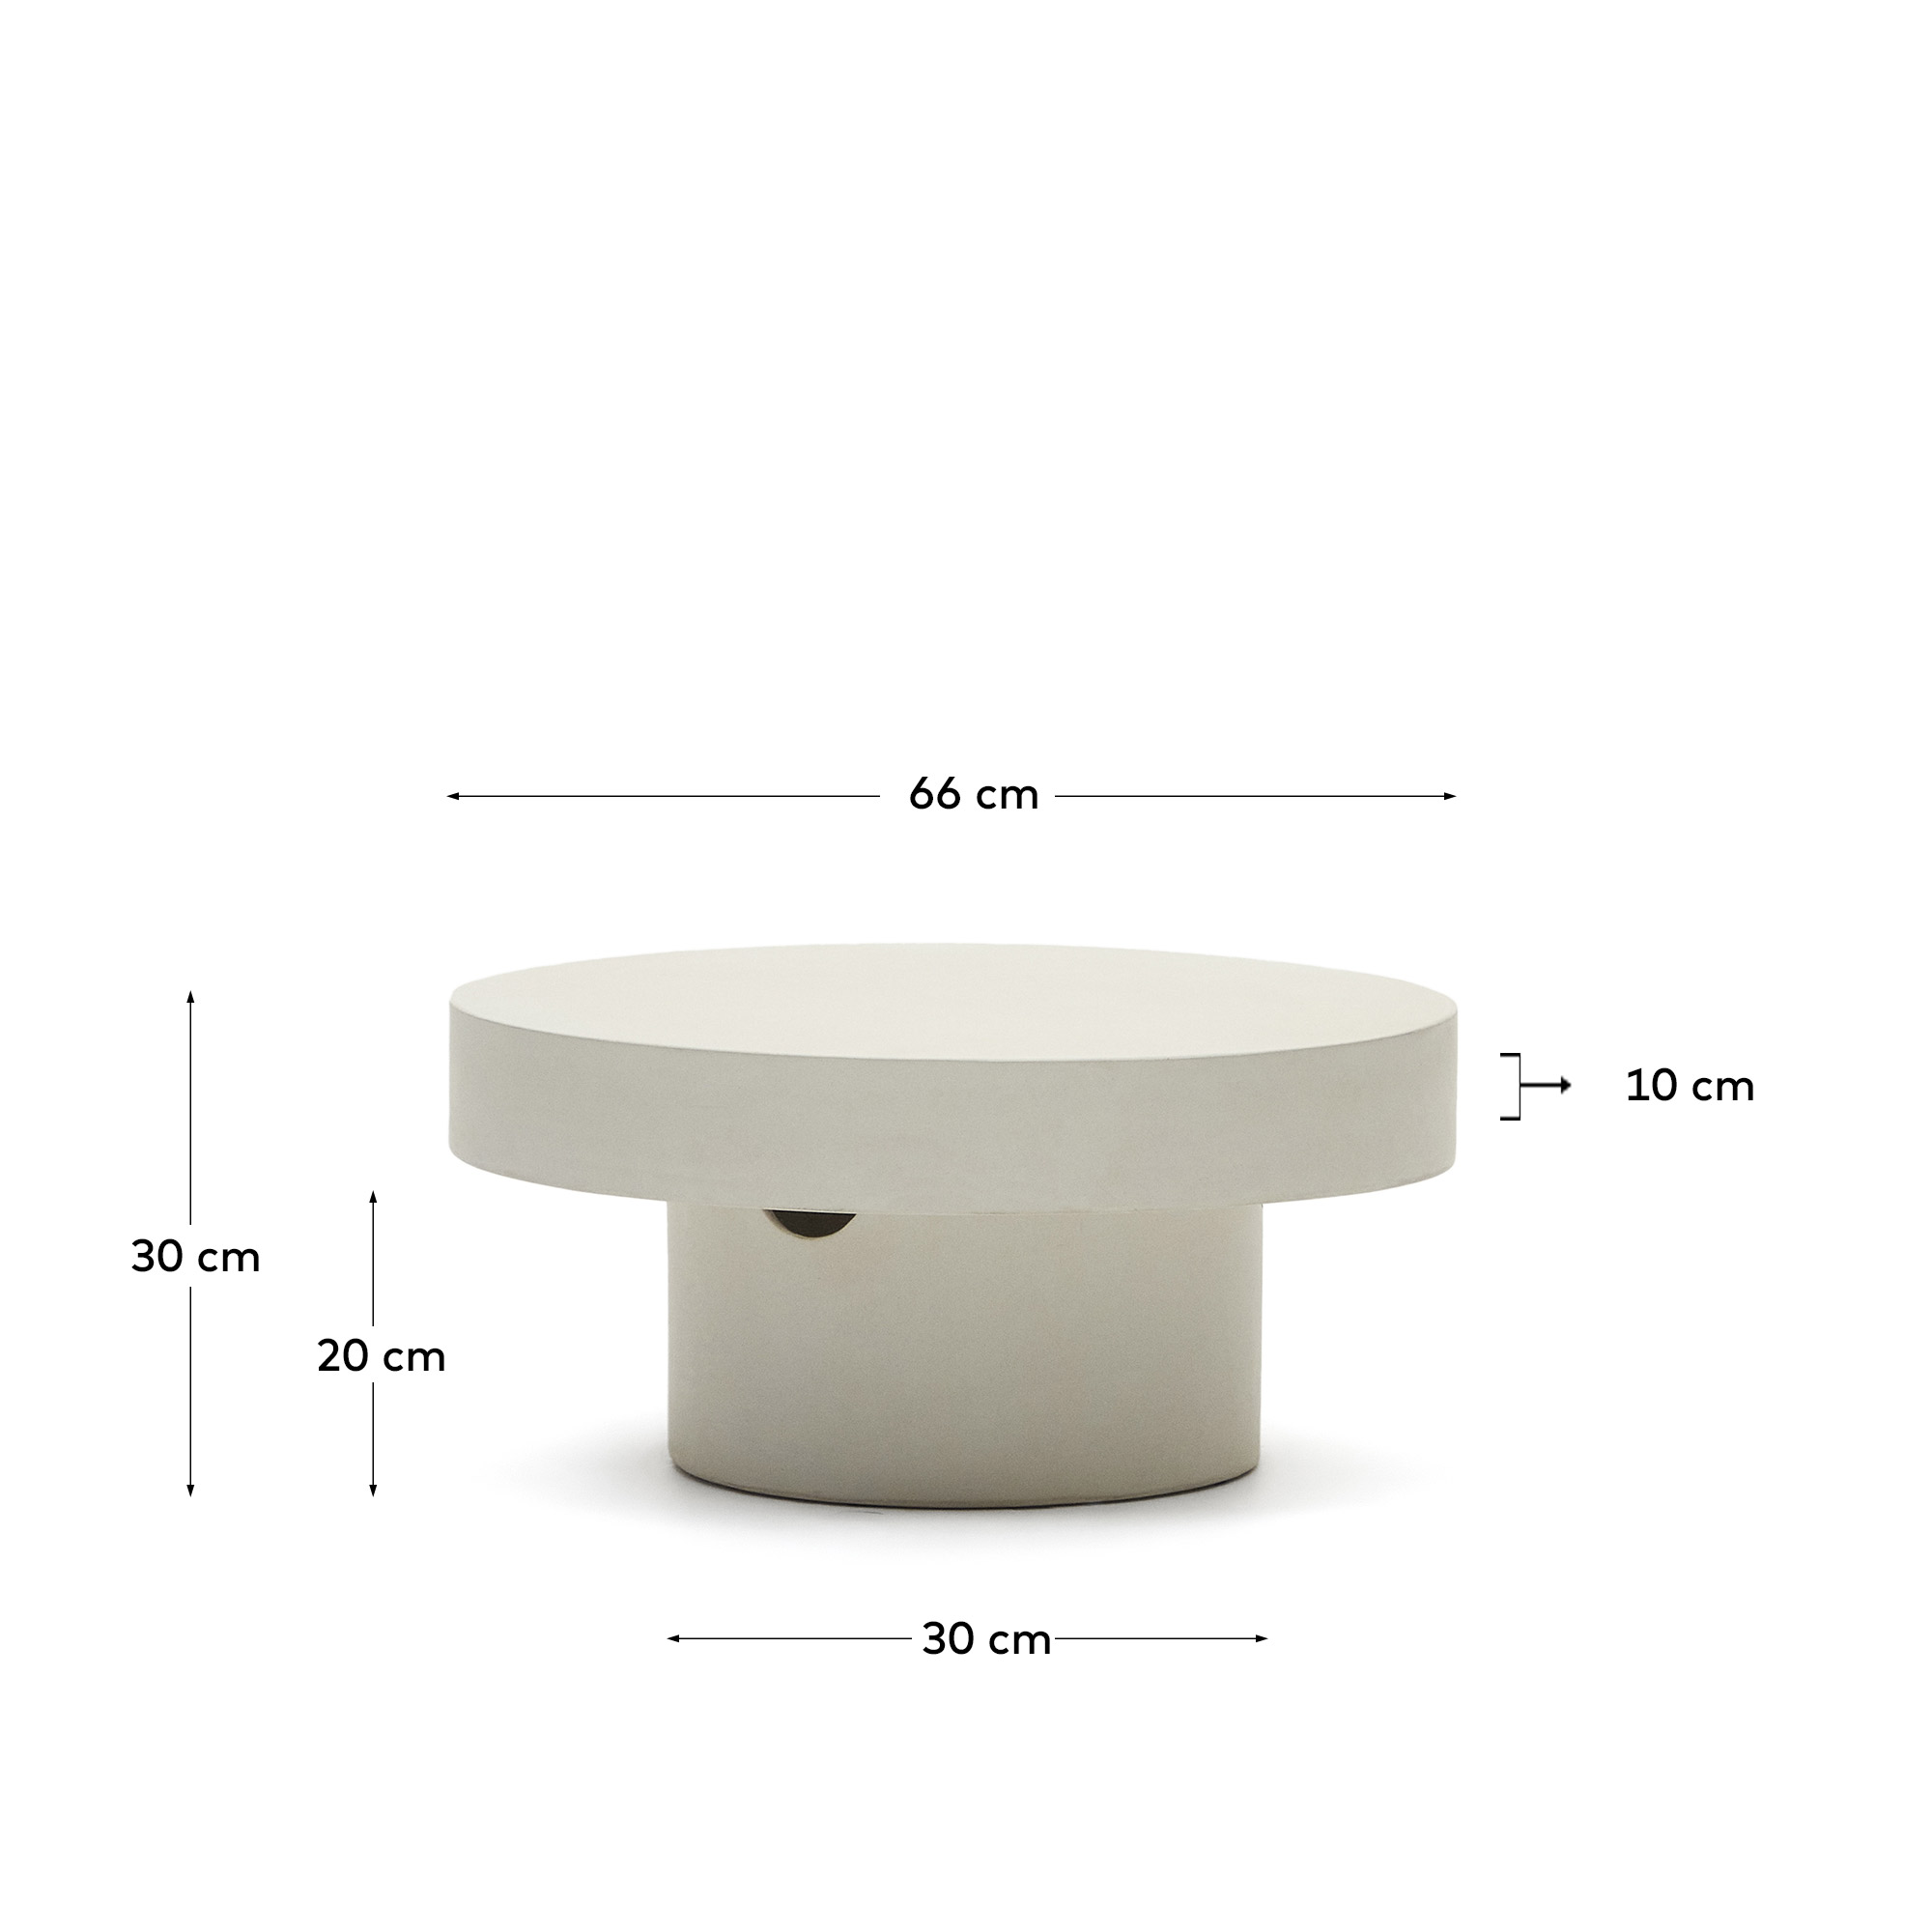 Aiguablava round coffee table in white cement, Ø 66 cm - sizes